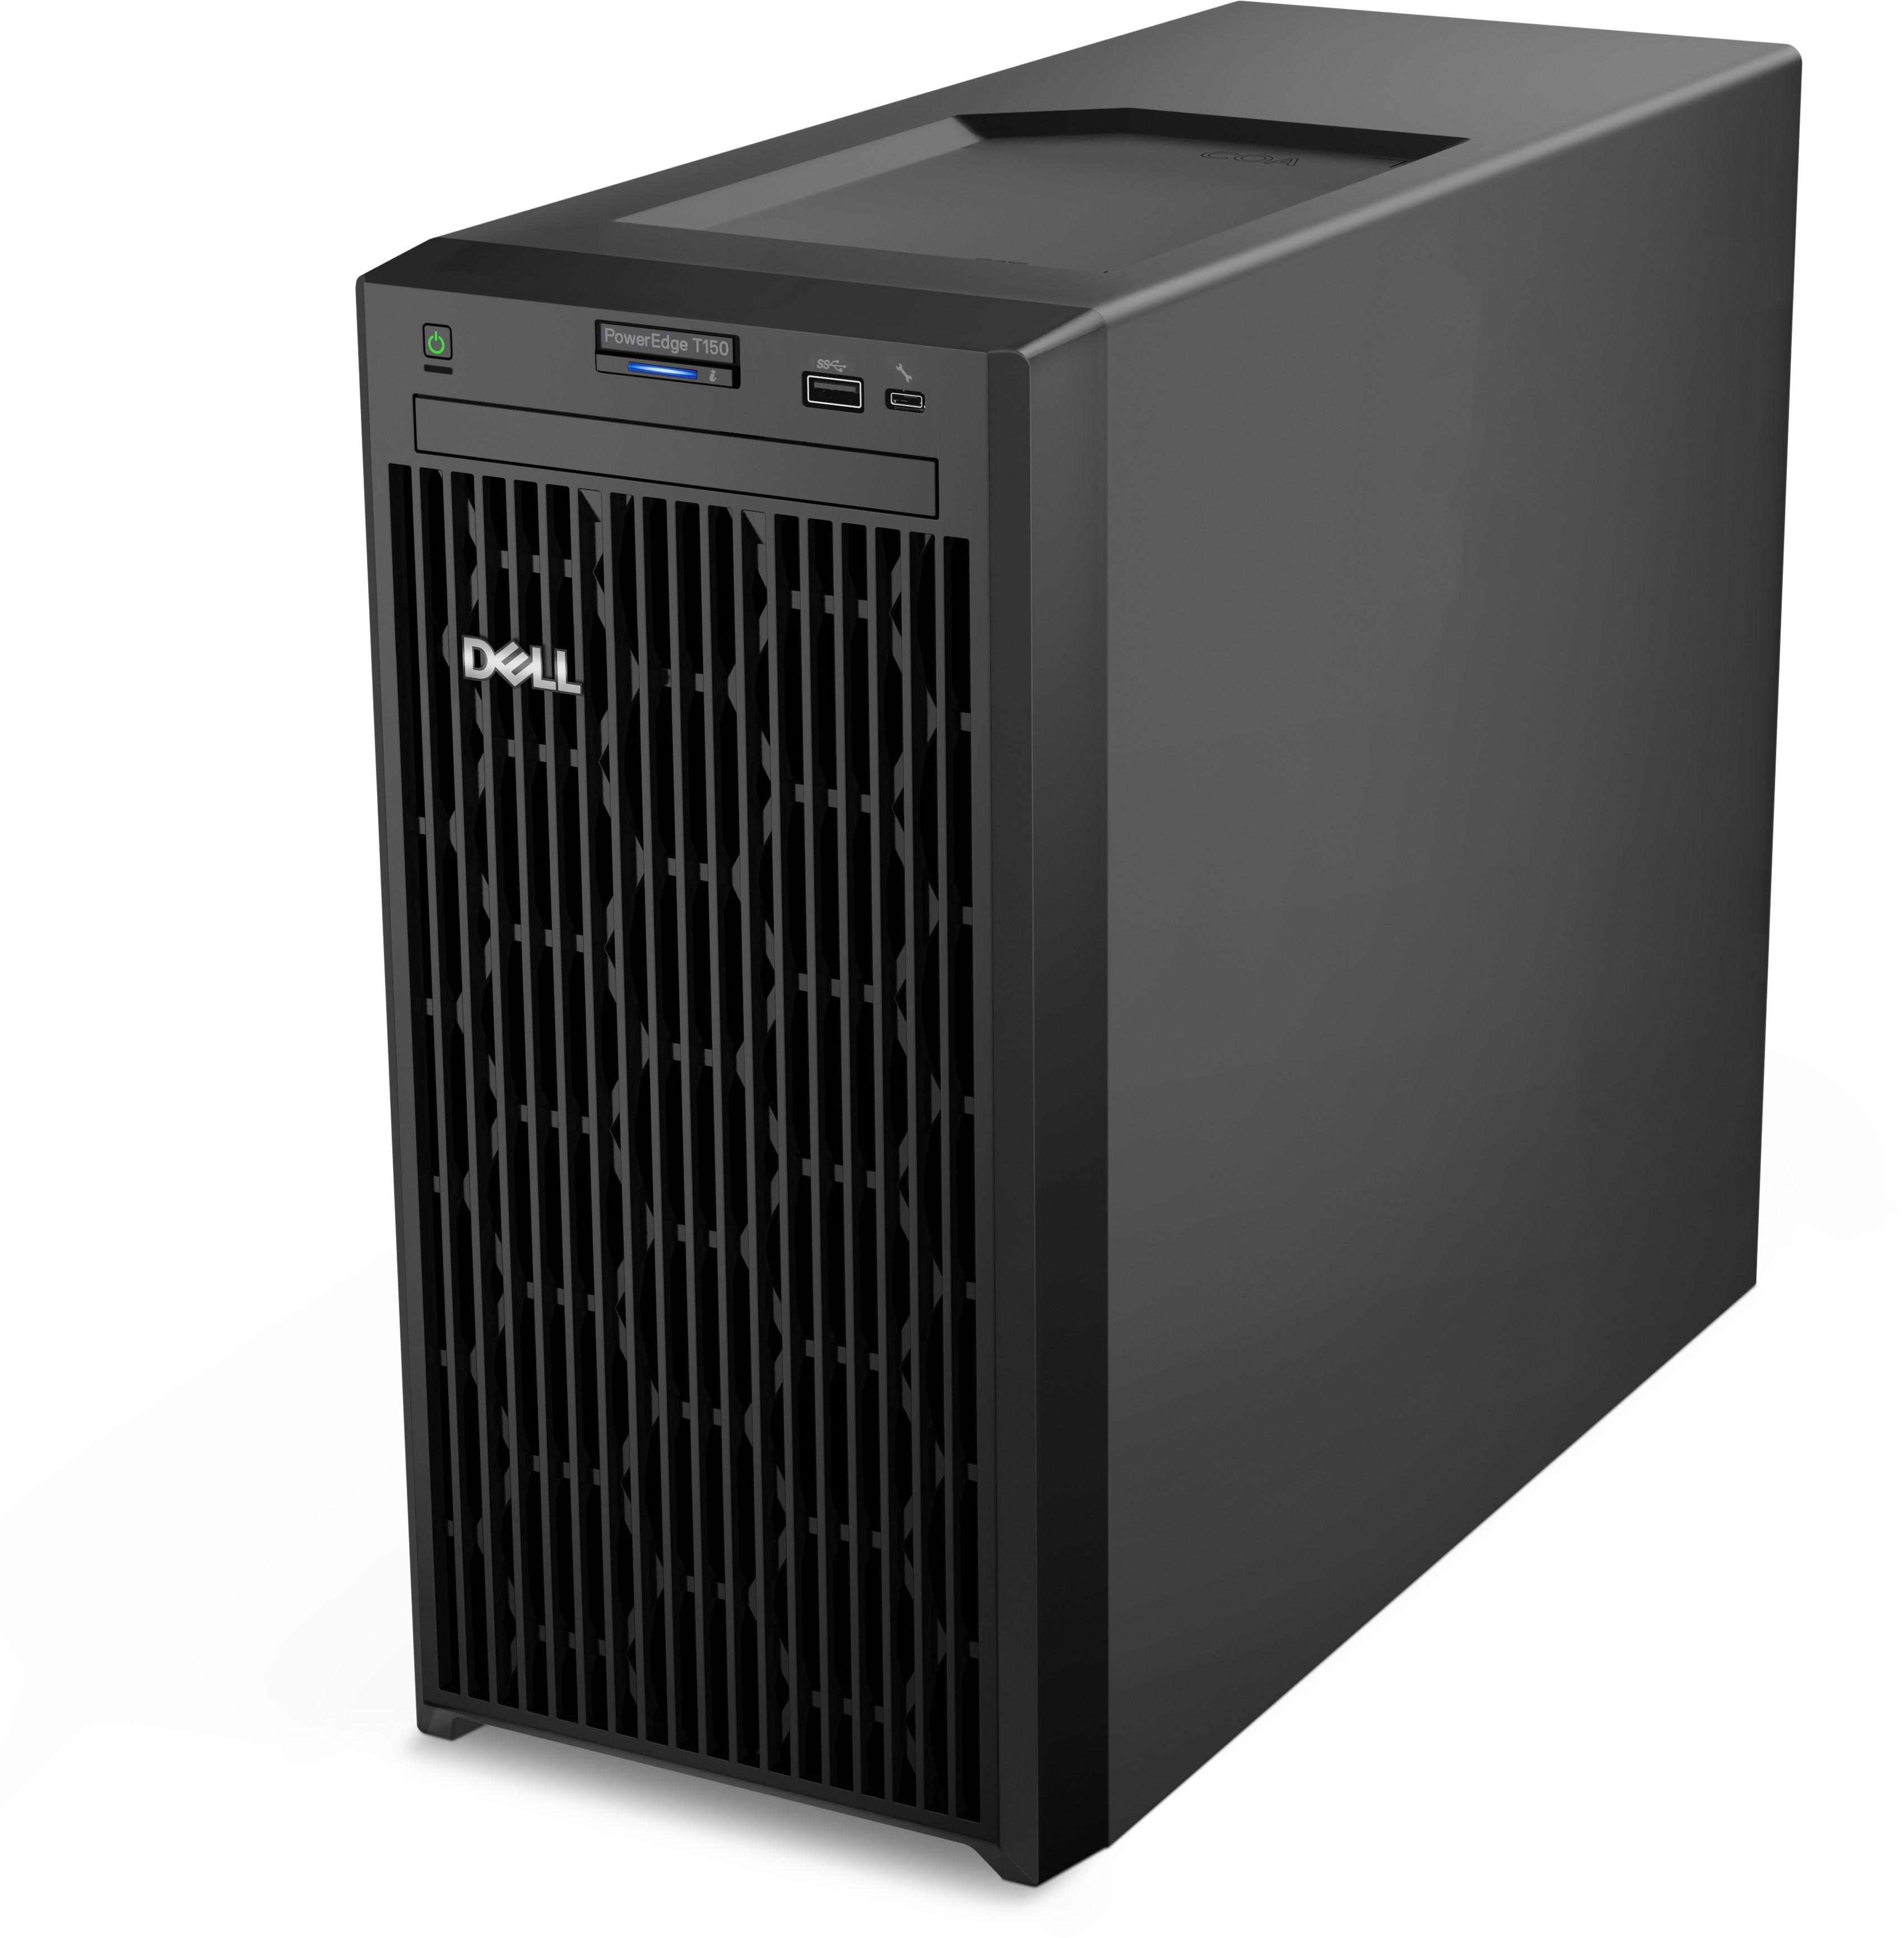 Serveur rack Dell PowerEdge R740 (PER740MM1) - Puresolutions